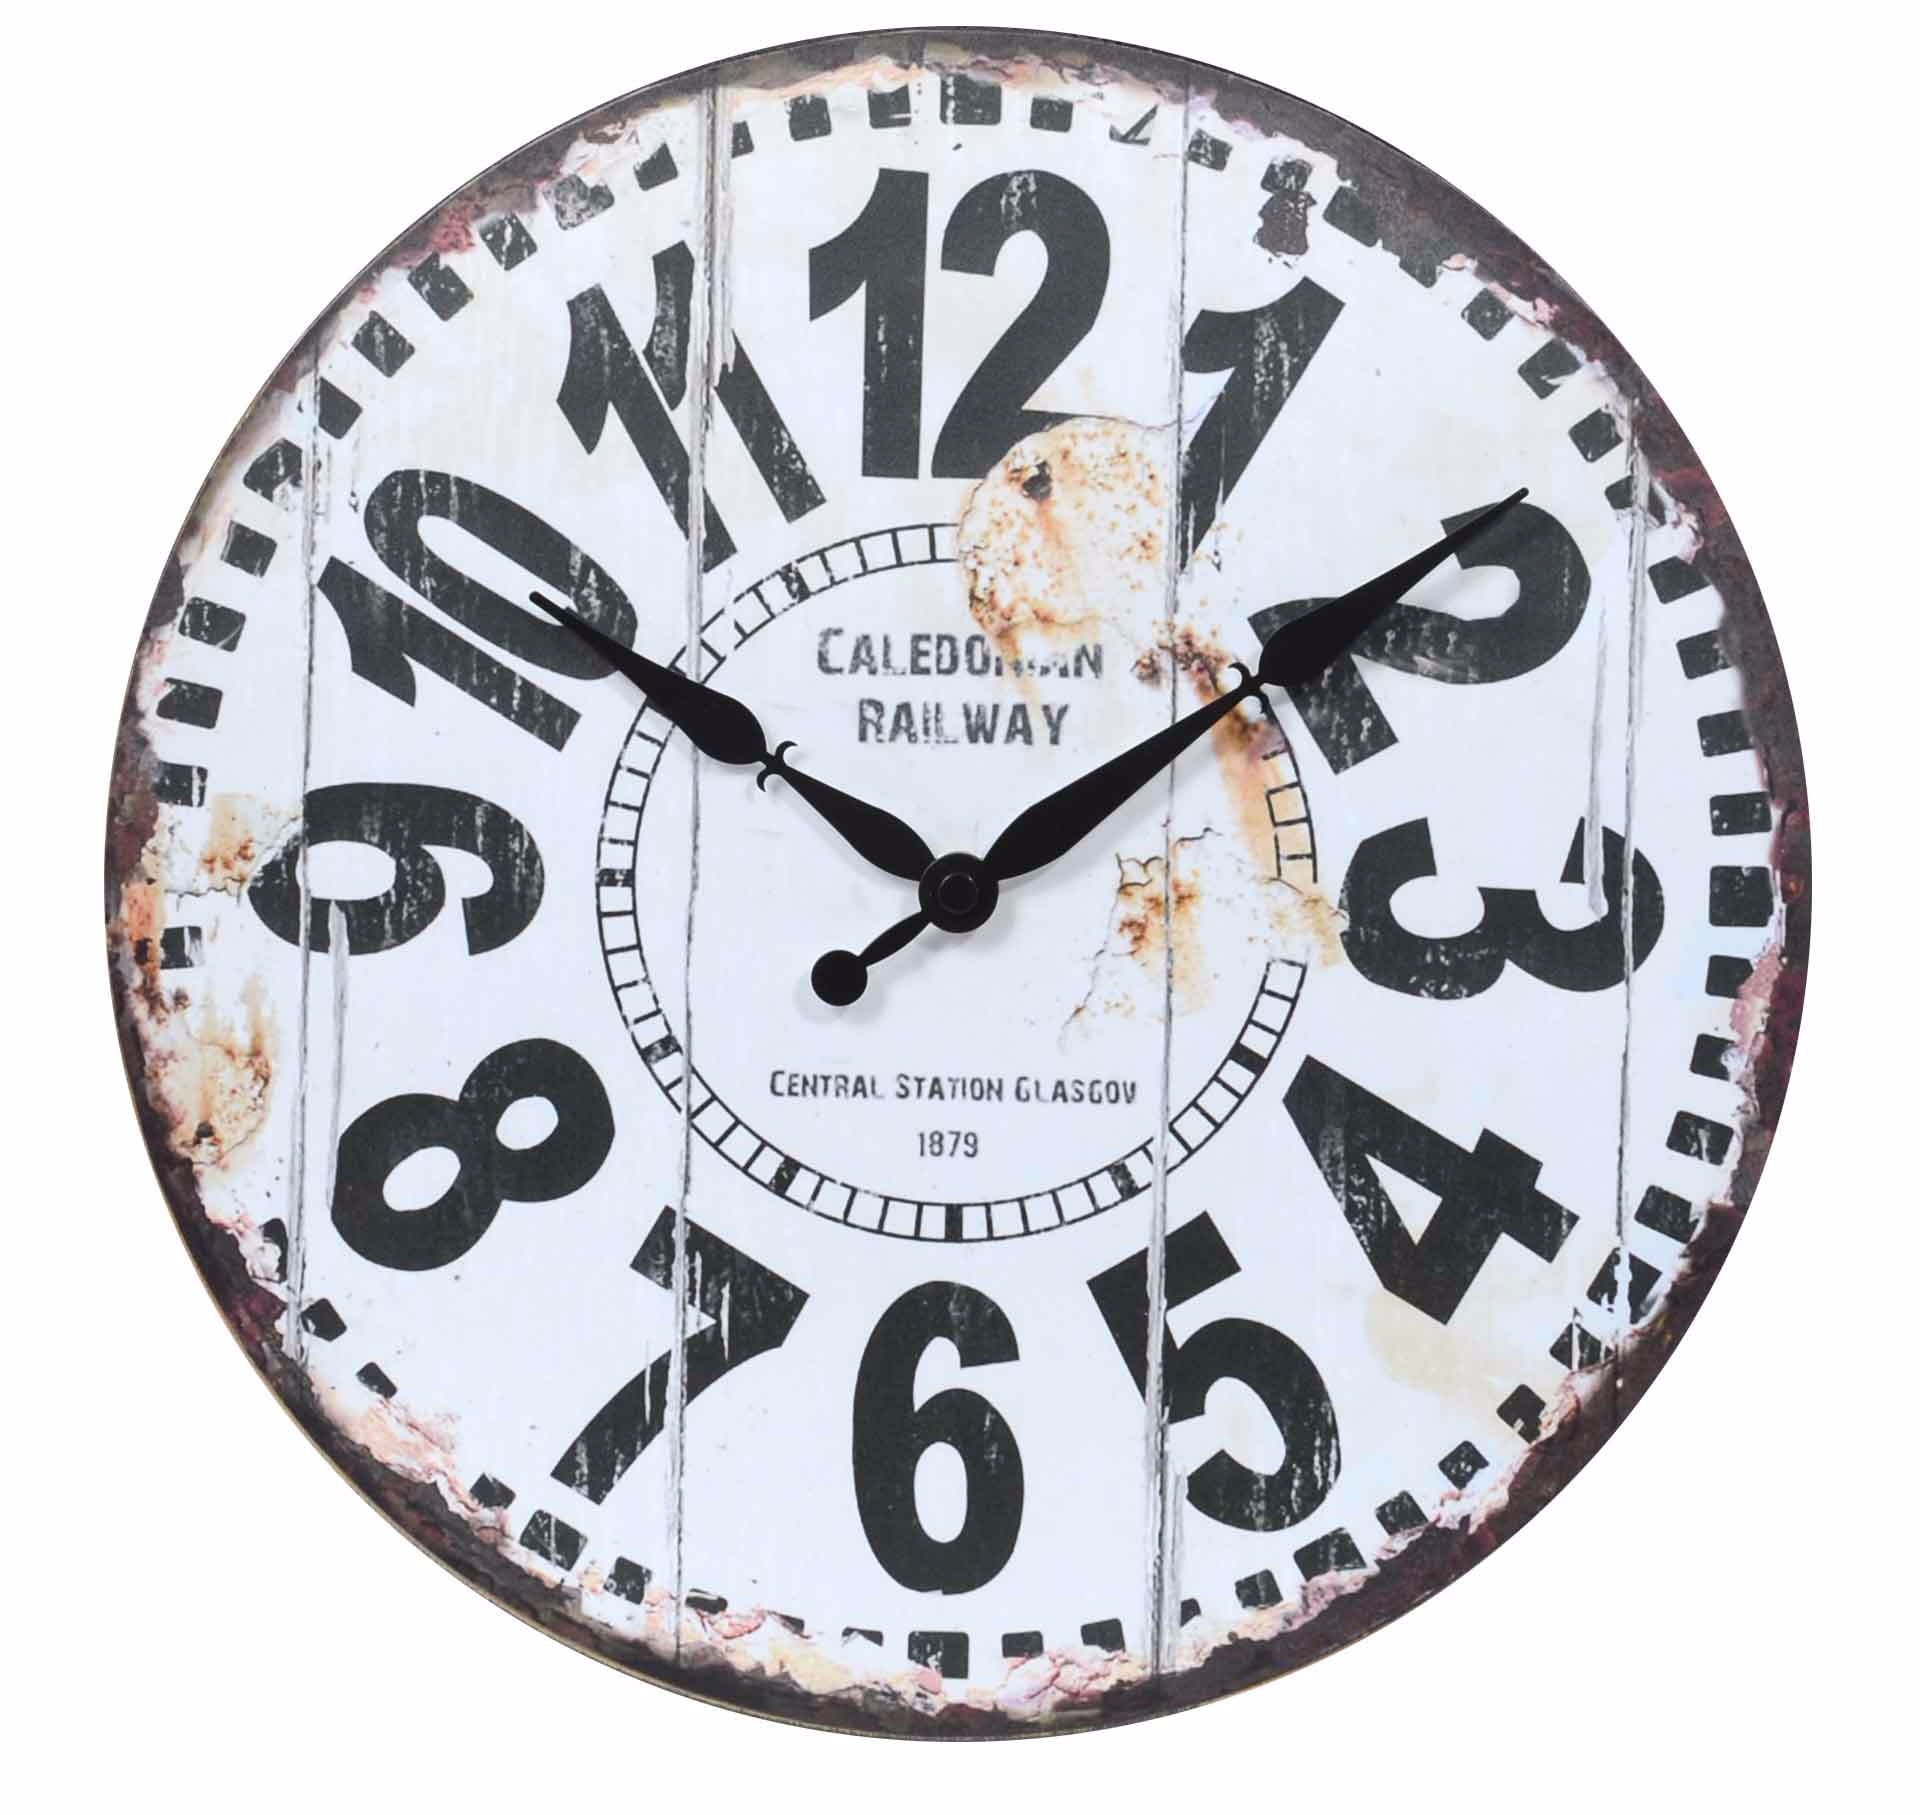 DEHENG 12 inch big numbers mdf design vintage wall clock